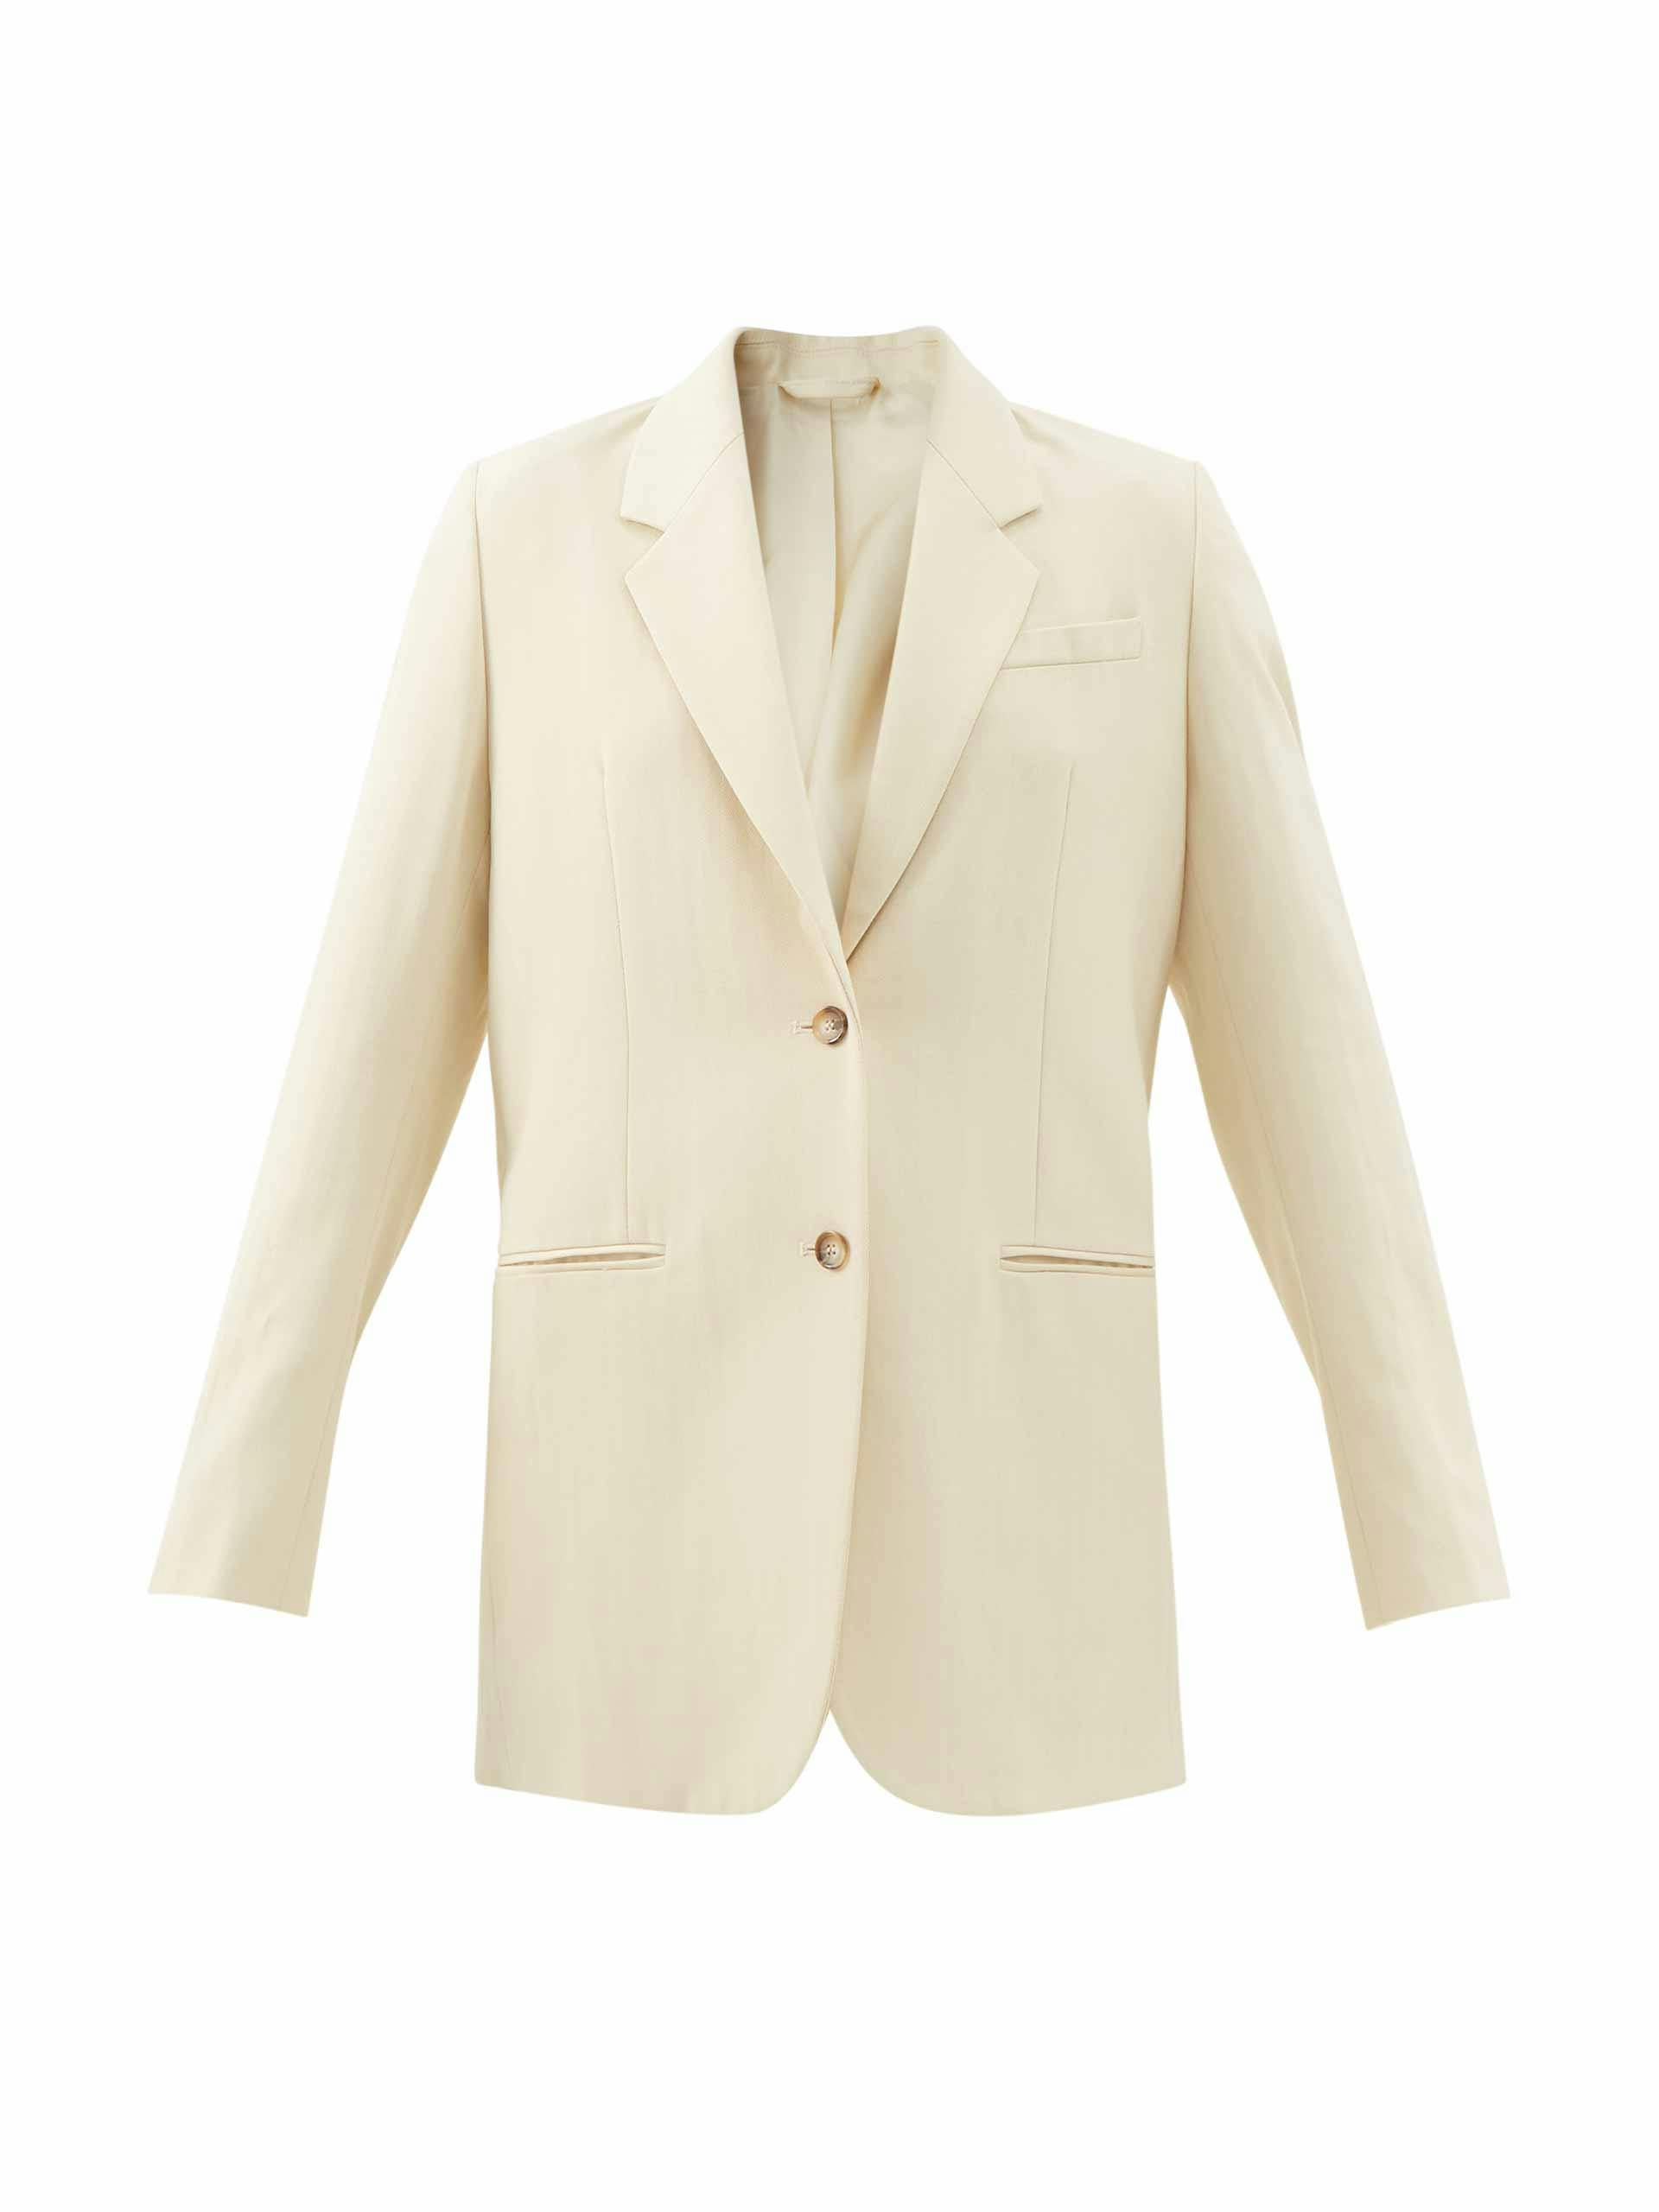 Cream tailored herringbone twill suit jacket